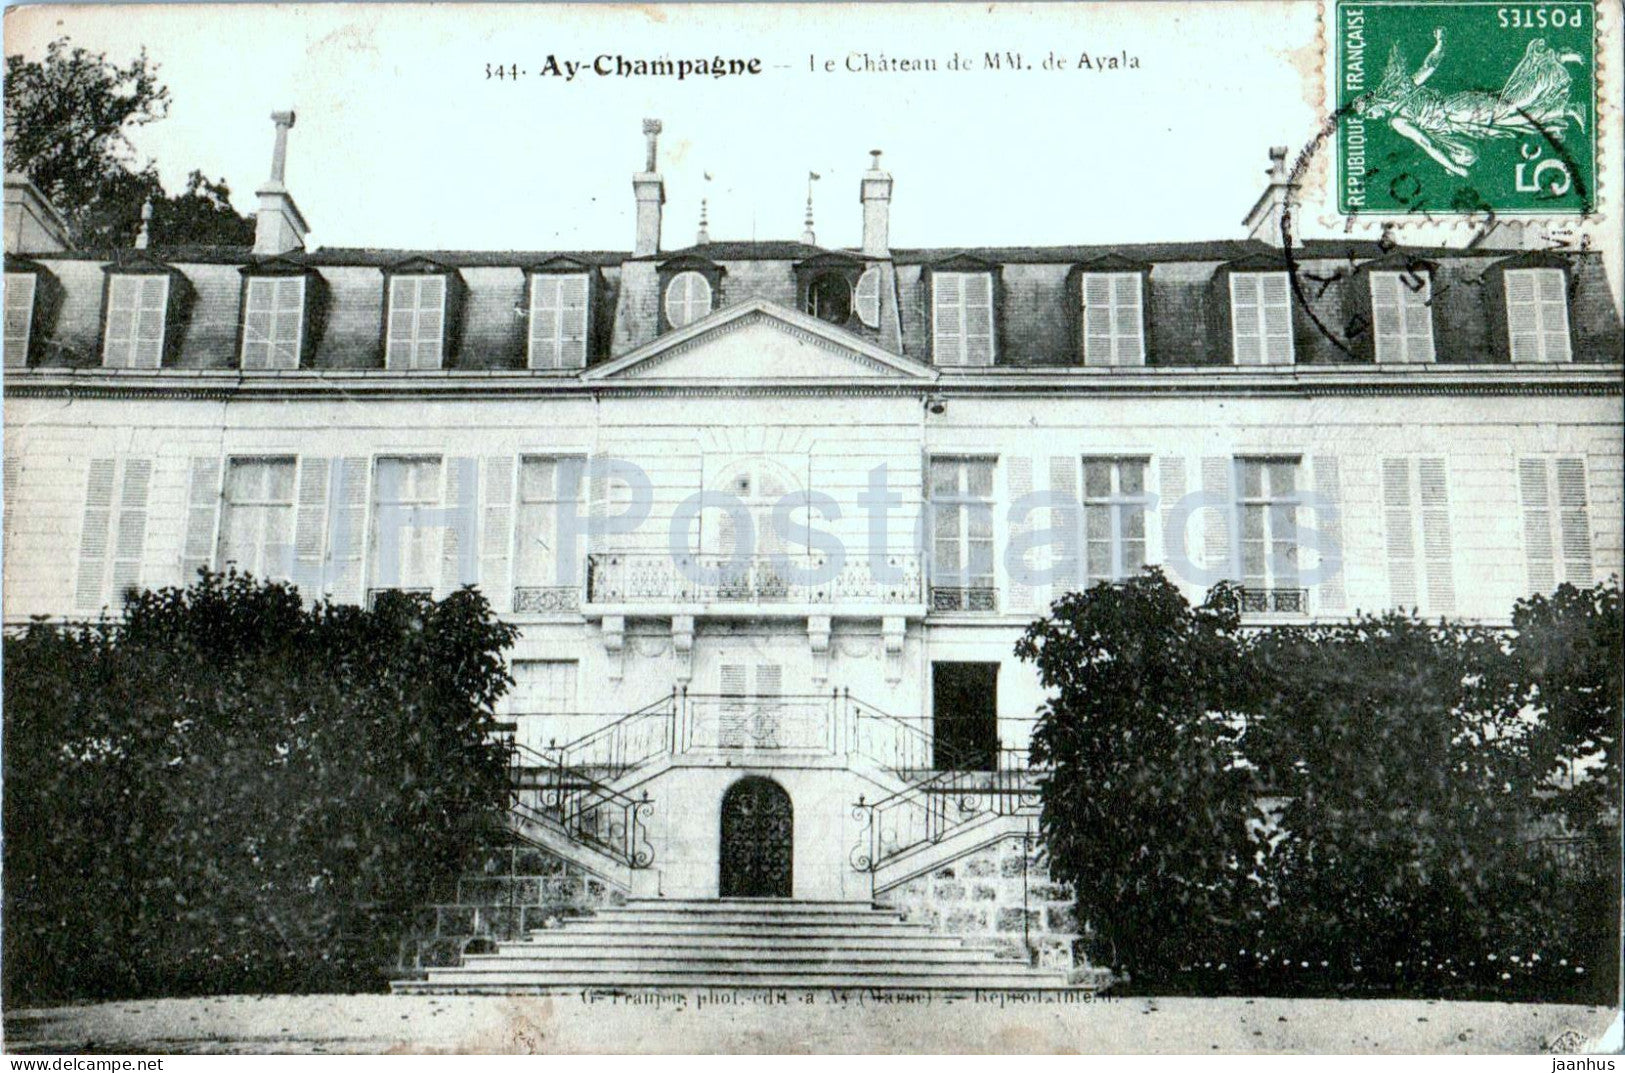 Ay Champagne - Le Chateau de MM de Ayala - castle - 344 - old postcard - 1909 - France - used - JH Postcards